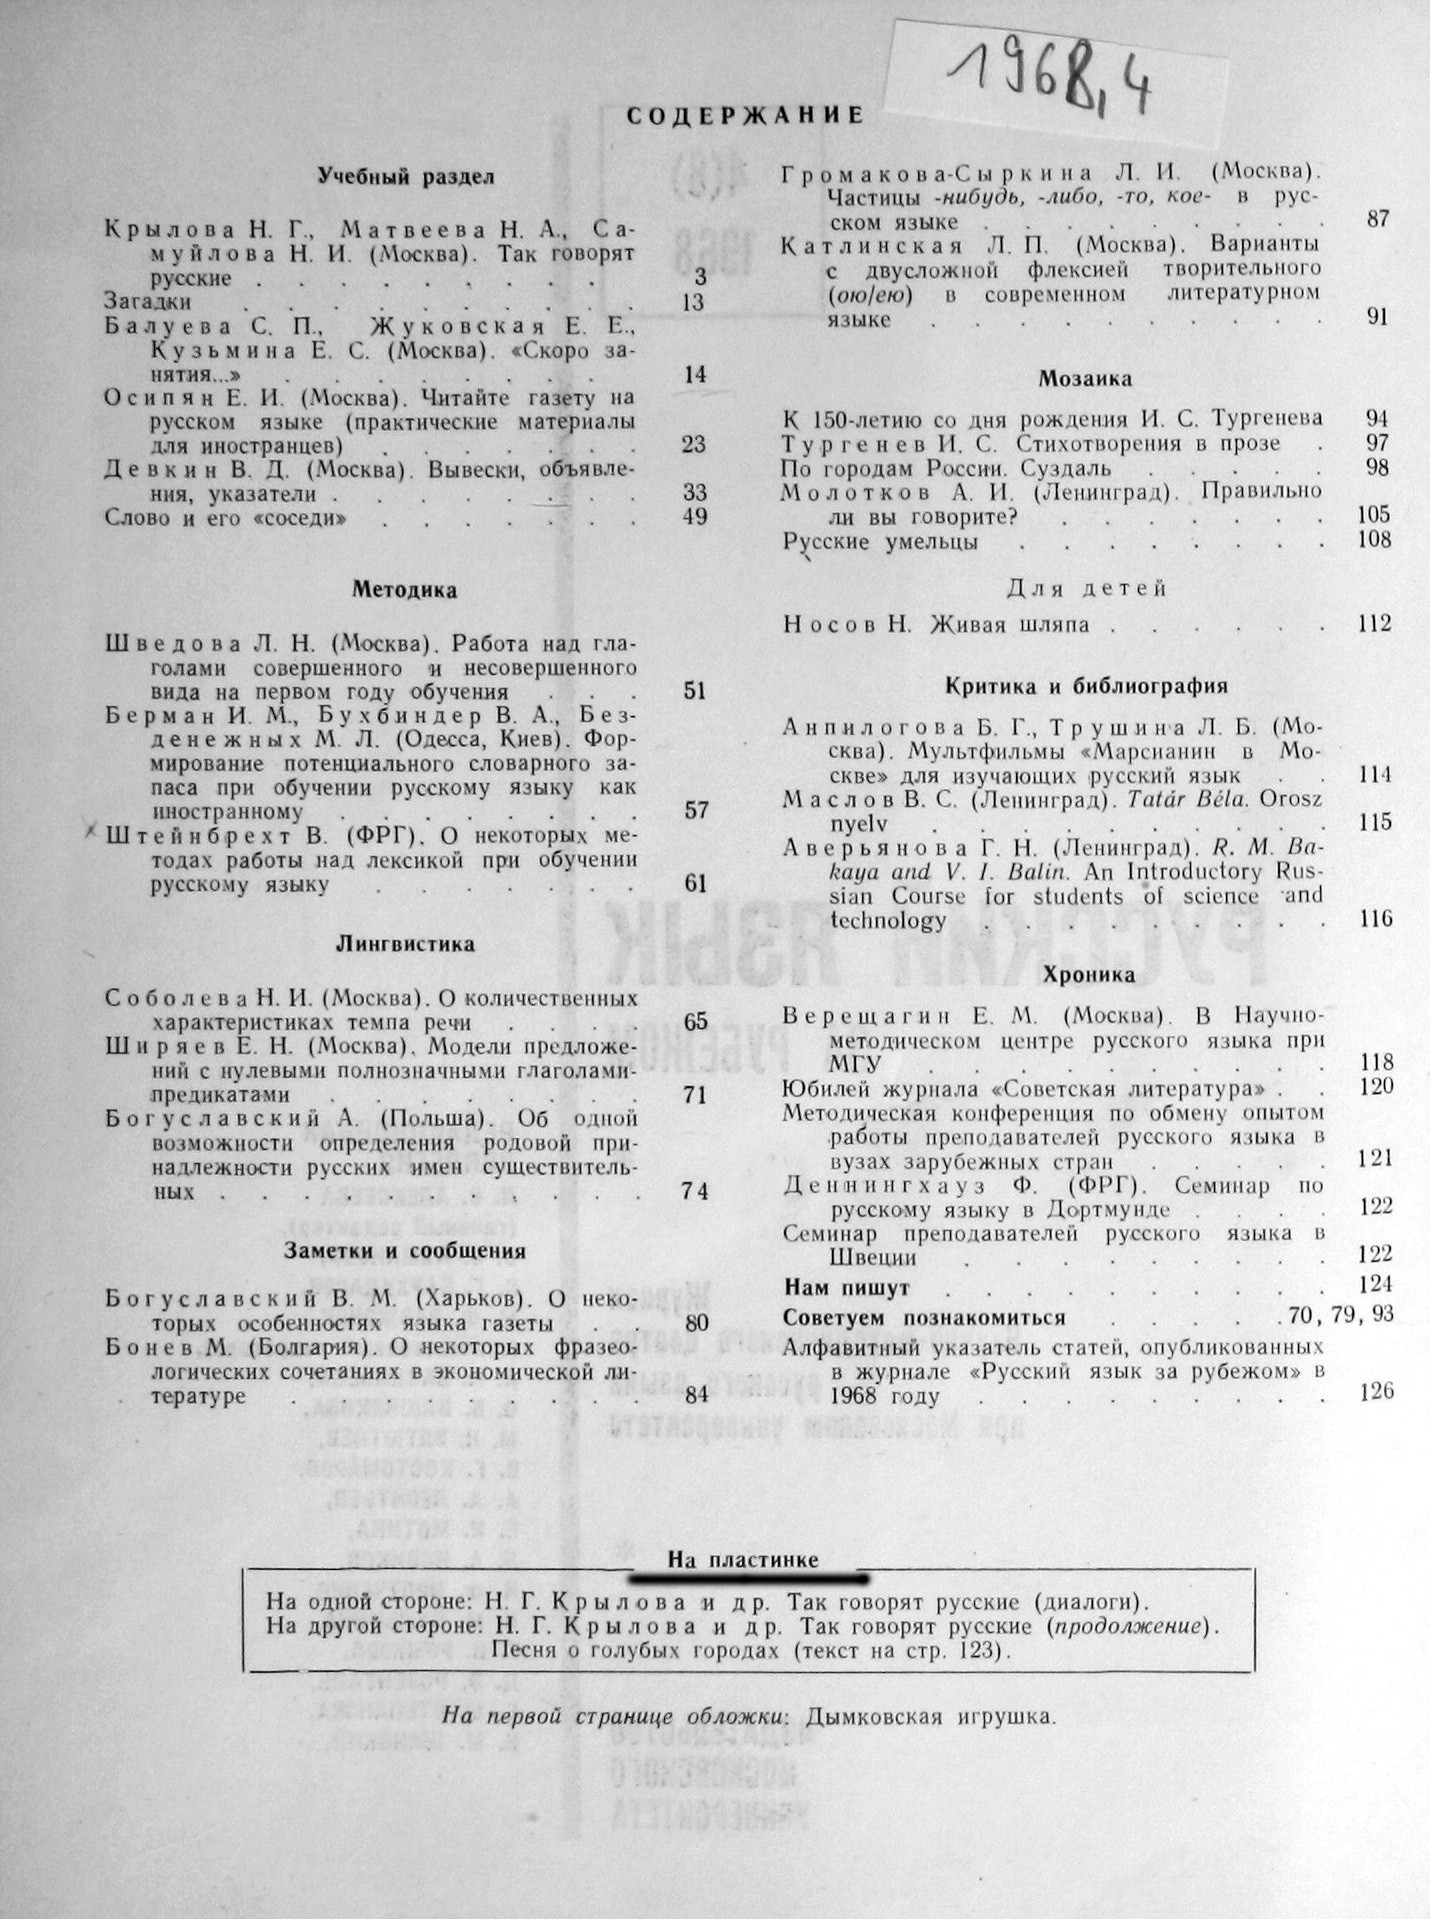 "РУССКИЙ ЯЗЫК ЗА РУБЕЖОМ", № 4 - 1968